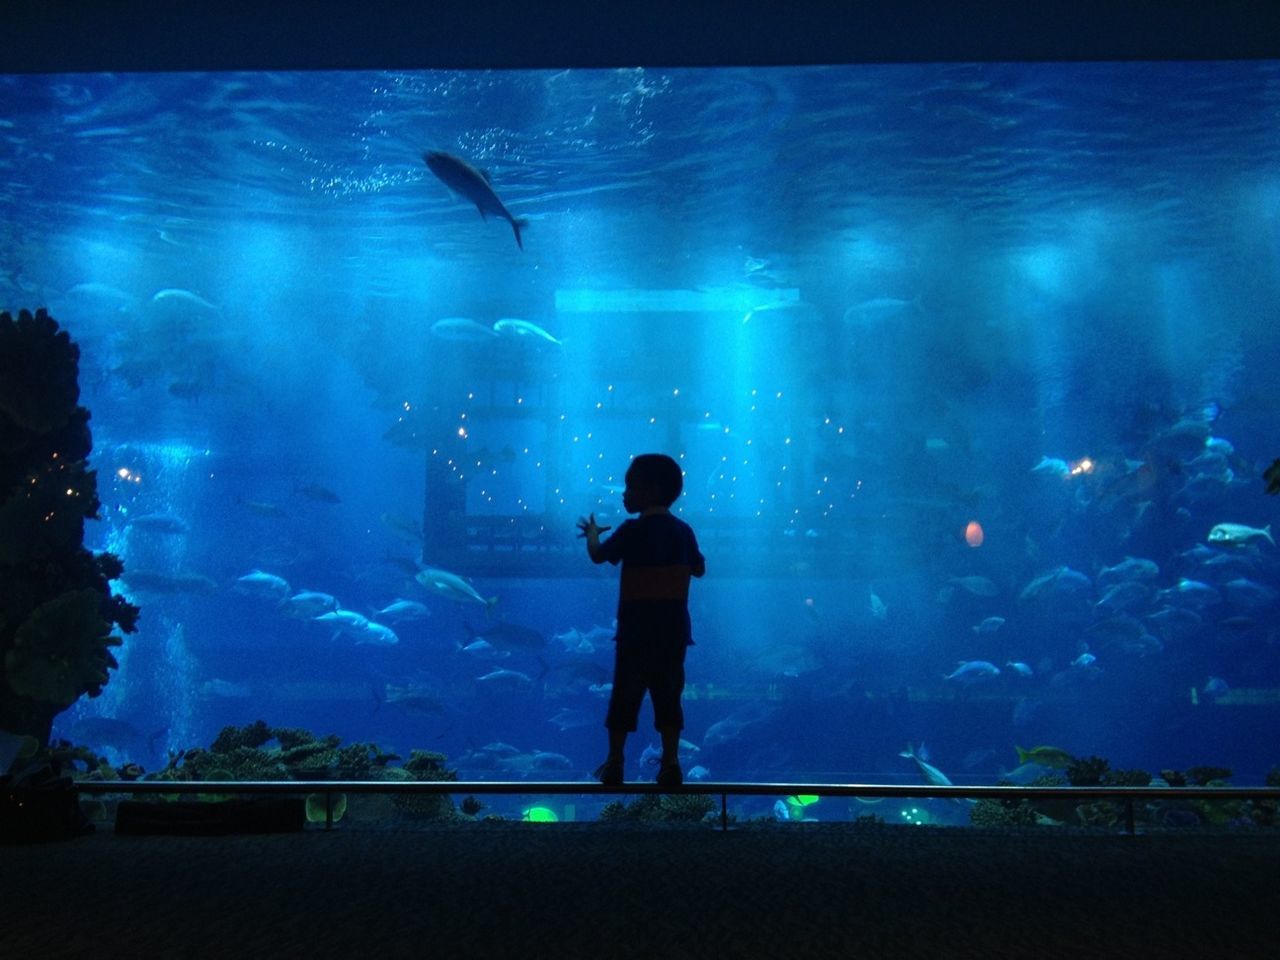 Boy watching fish in aquarium